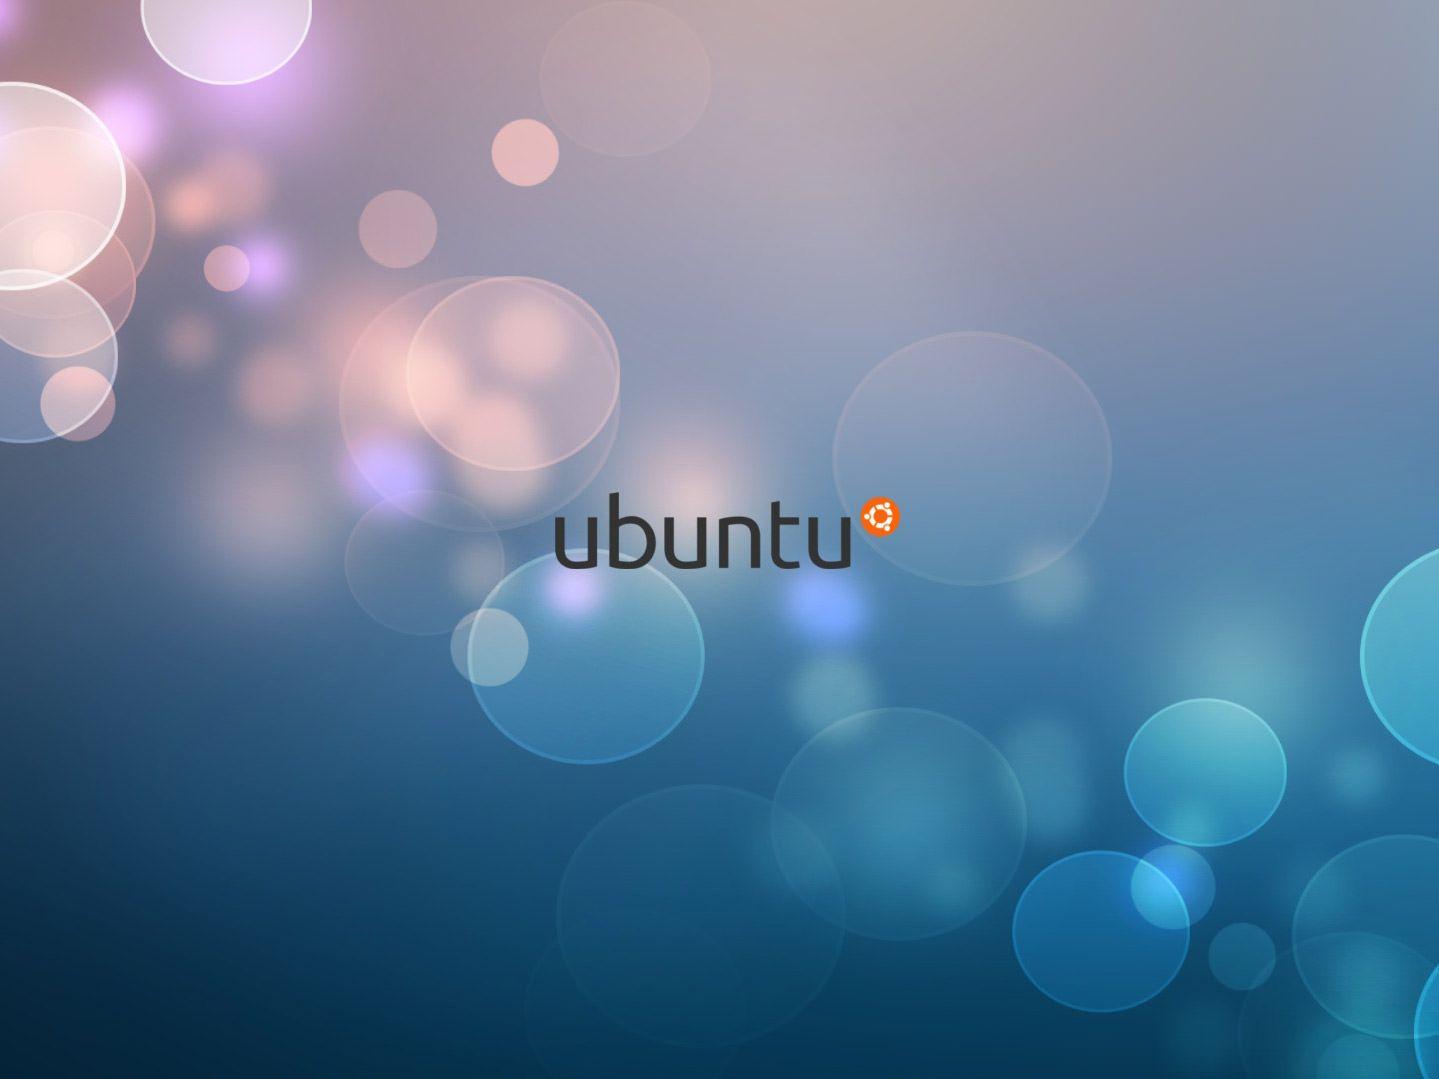 Beautiful Ubuntu Desktop Wallpaper